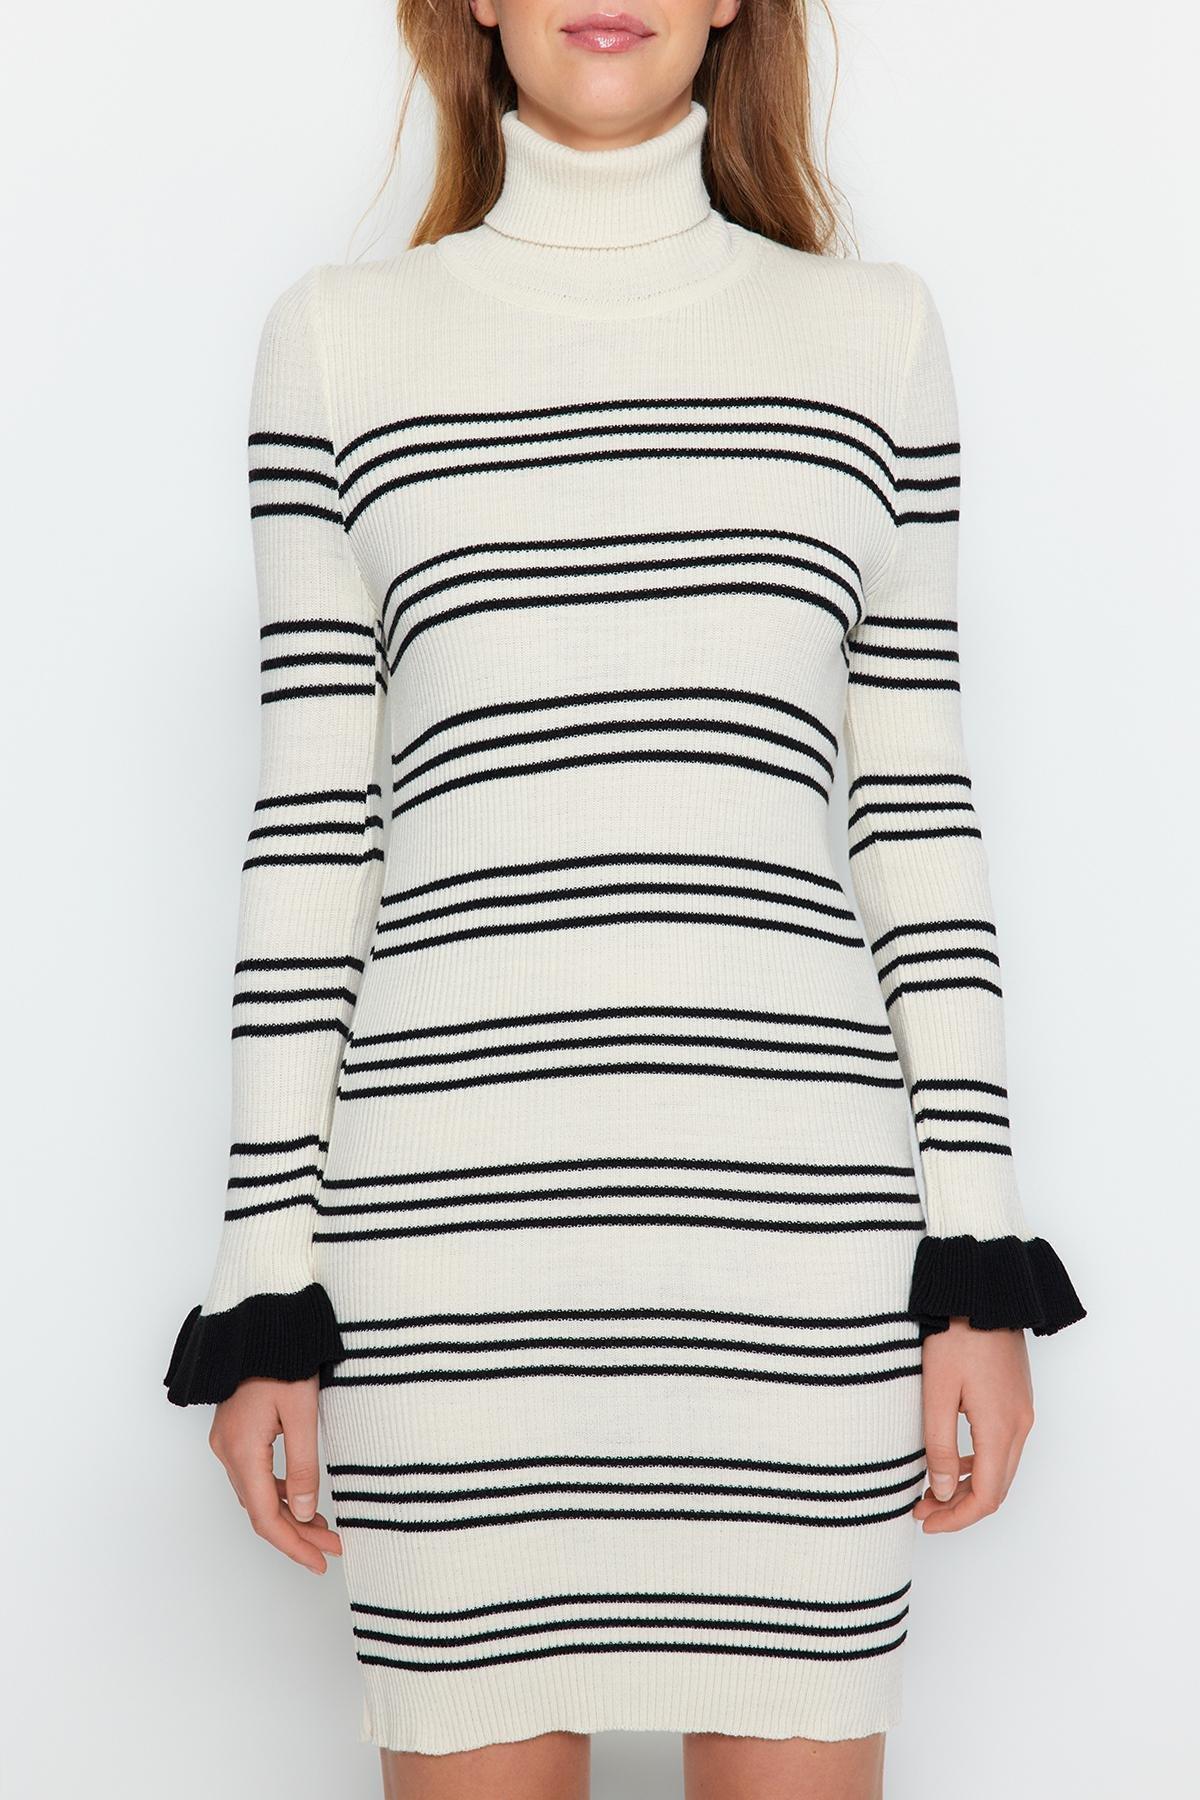 Trendyol - Cream Turtle Neck Sweater Dress